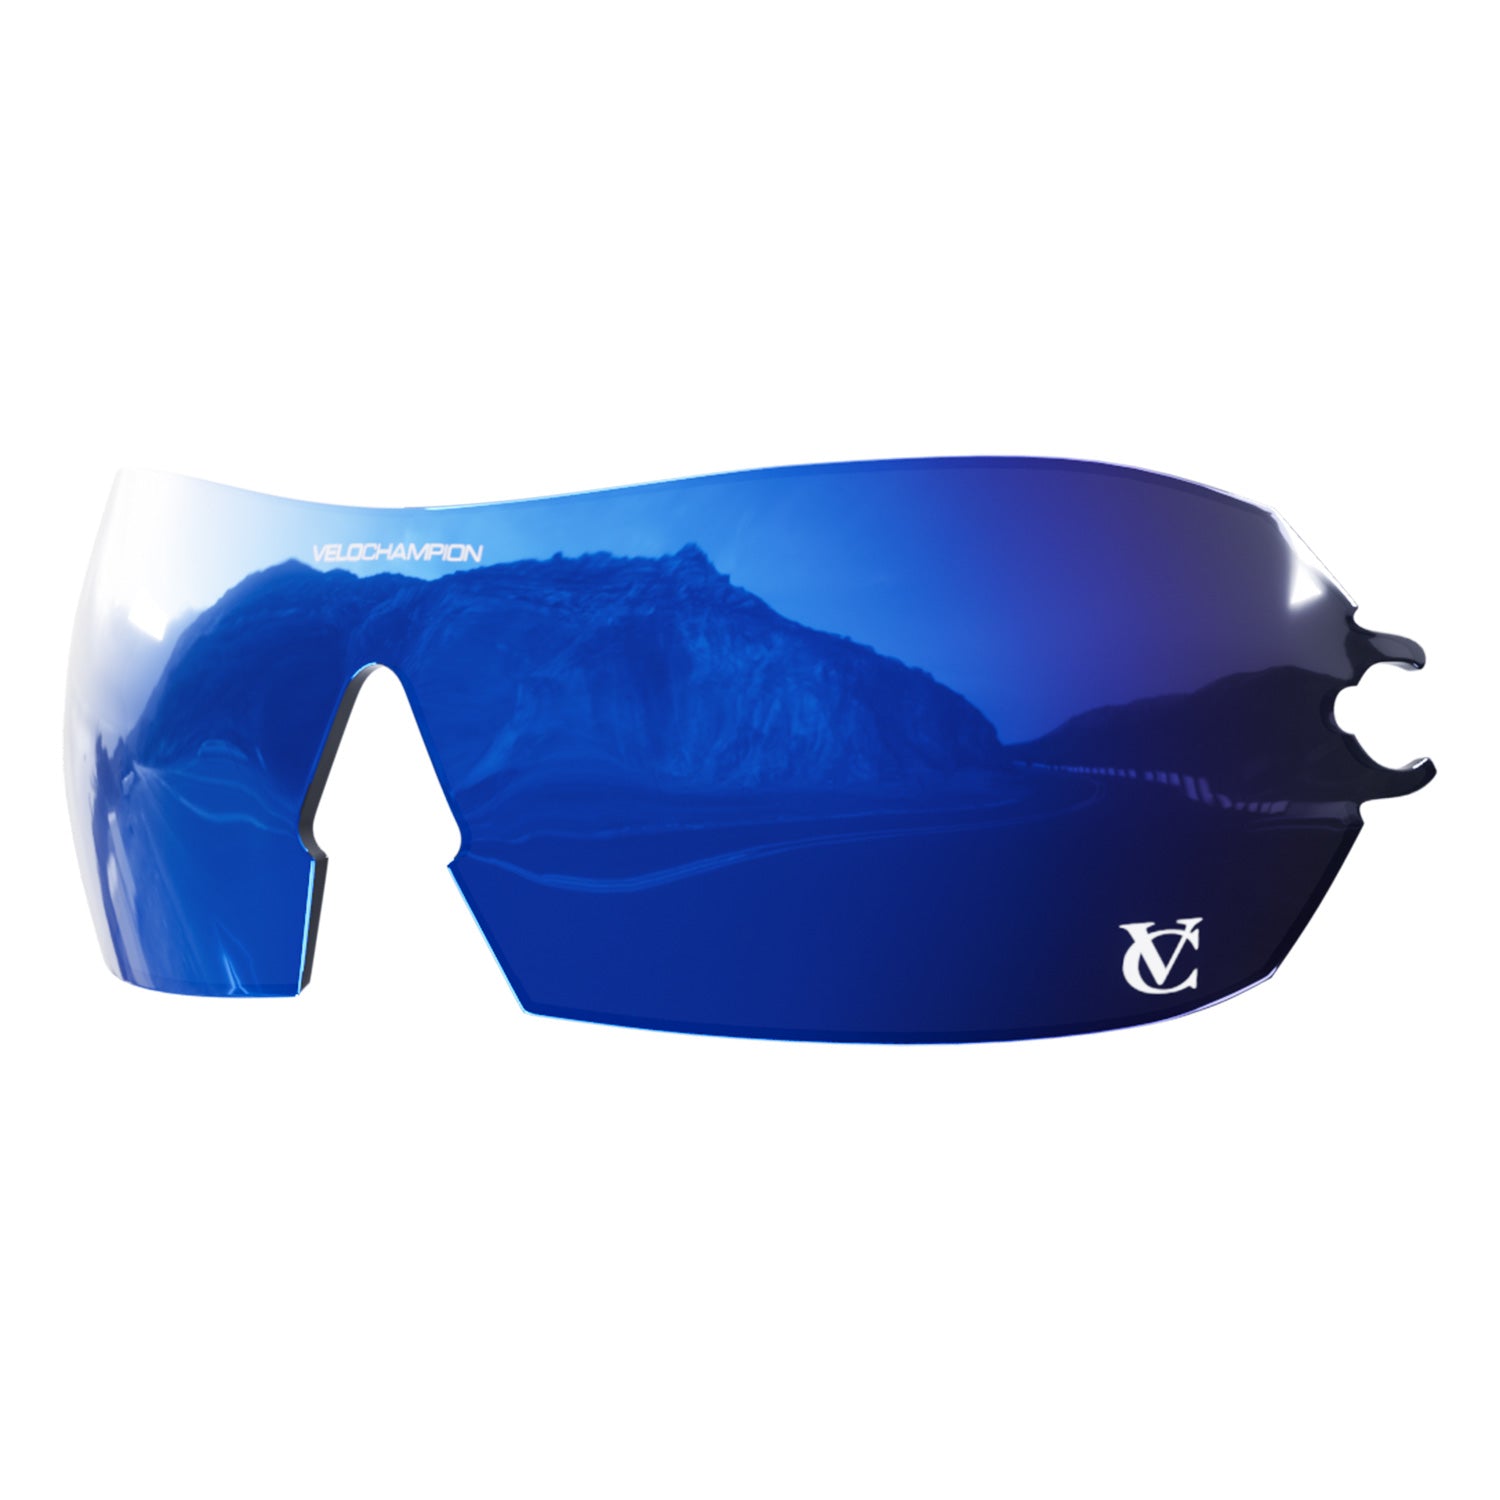 Customisable Hypersonic cycling sunglasses blue revo lens | VeloChampion